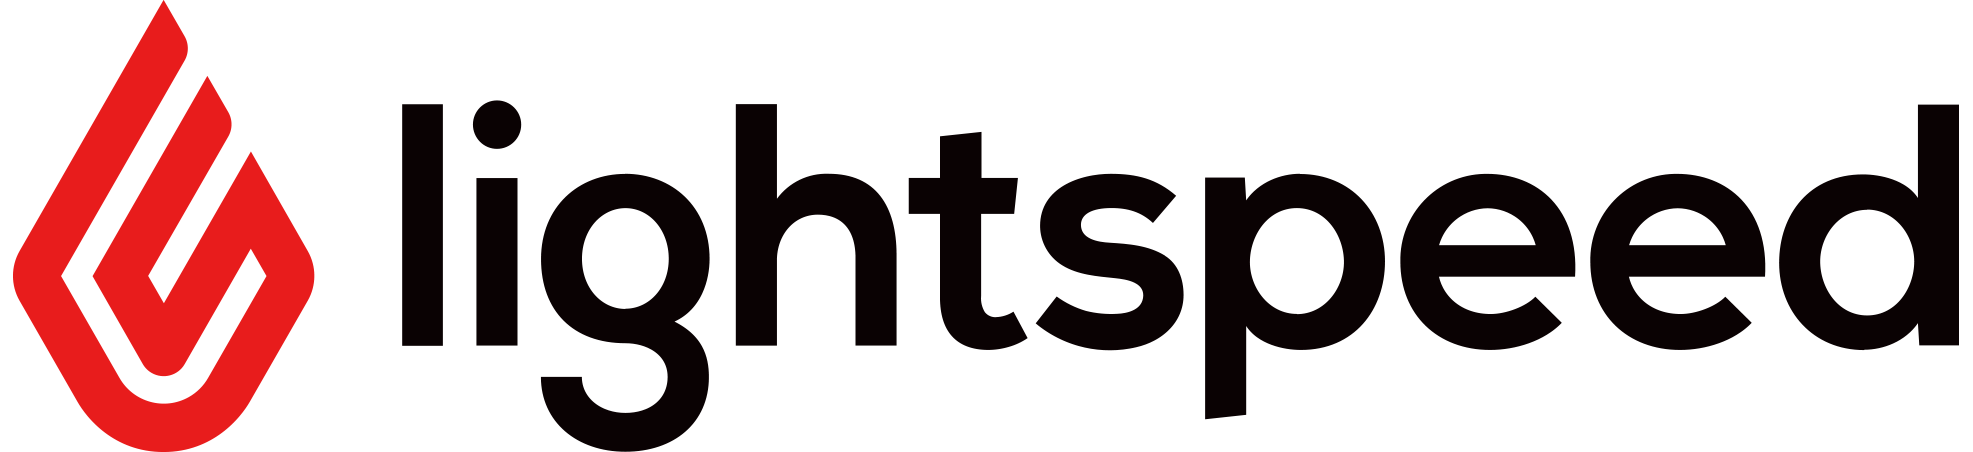 Lightspeed logo